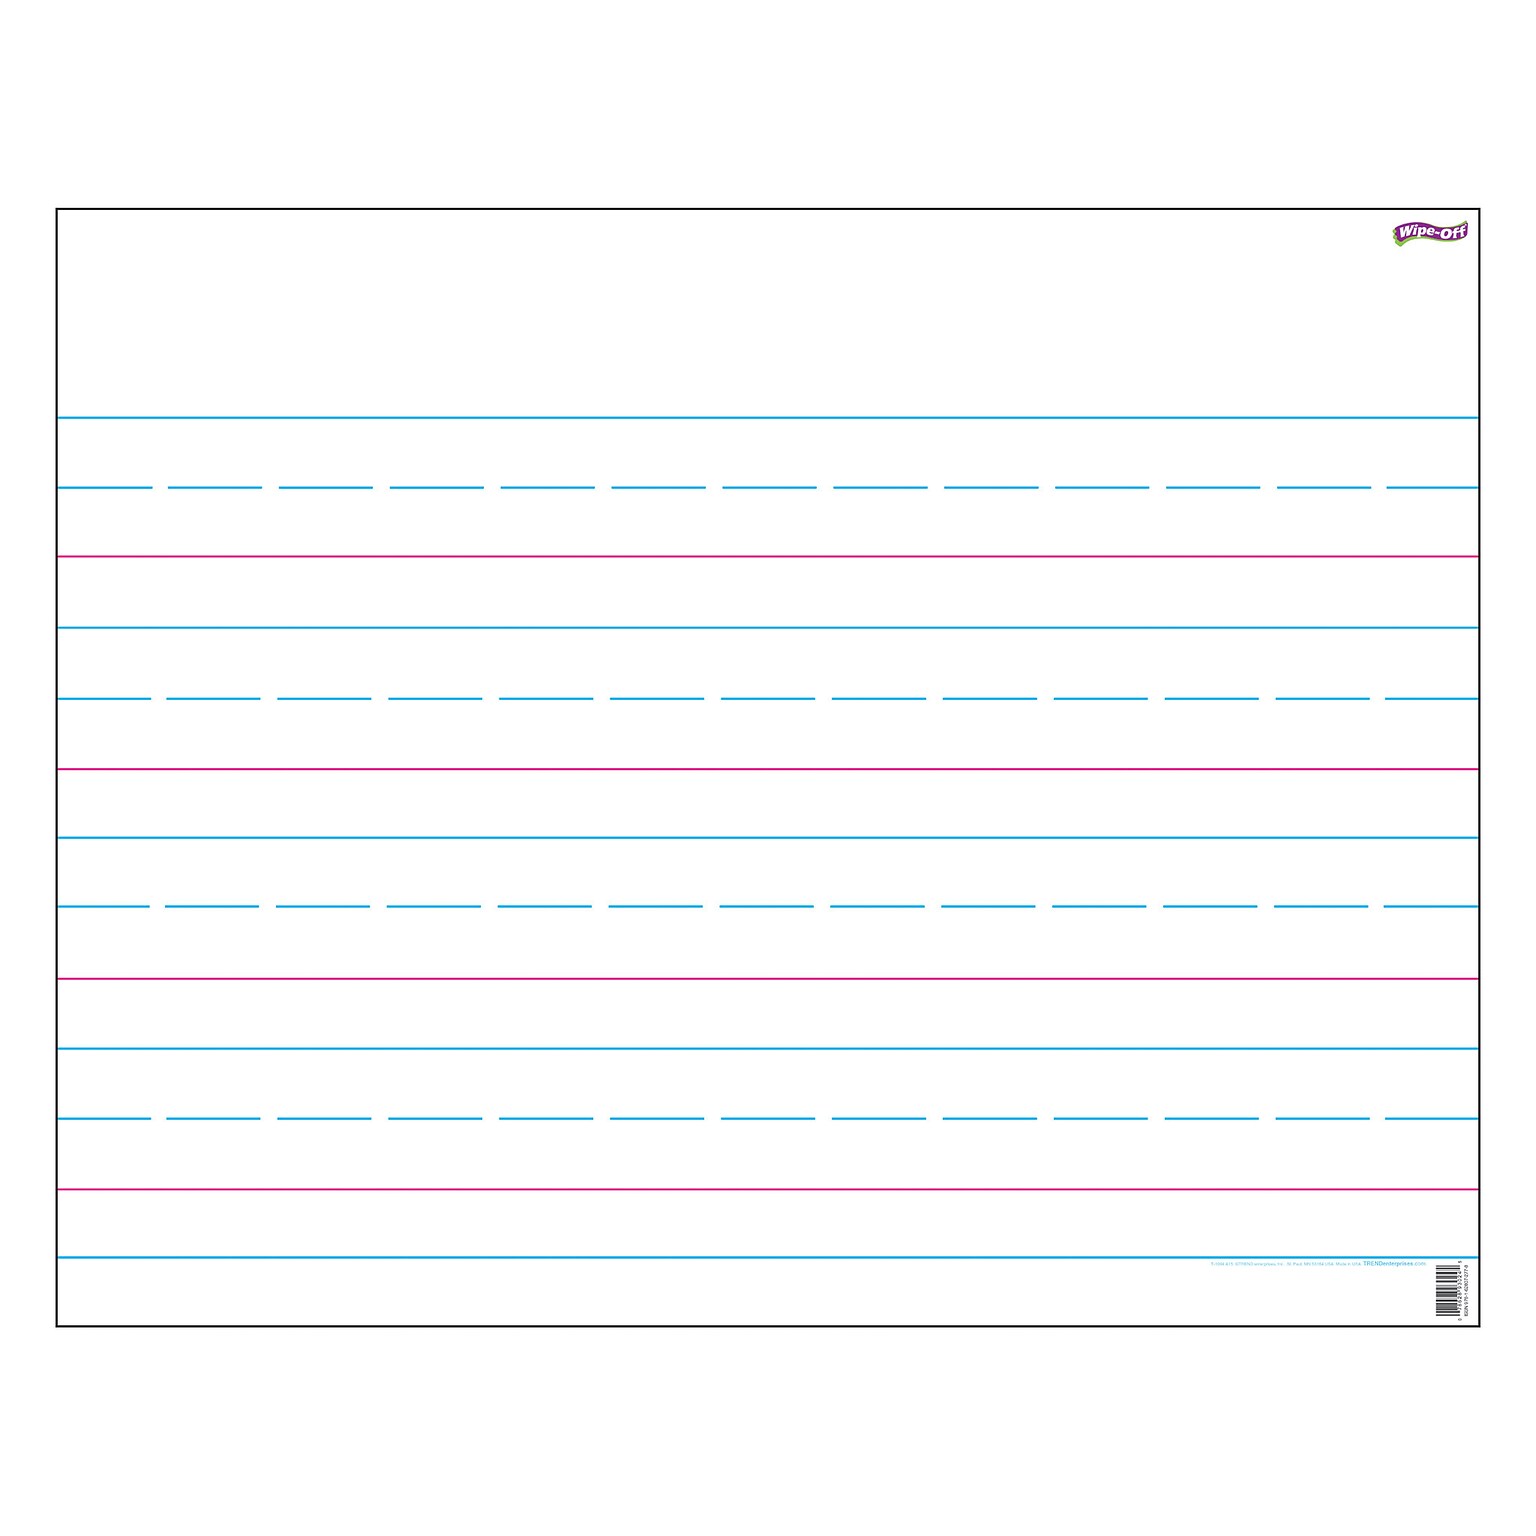 Trend Enterprises Handwriting Paper Wipe Off Chart, 28 x 22, 15/Bundle (T-27304)